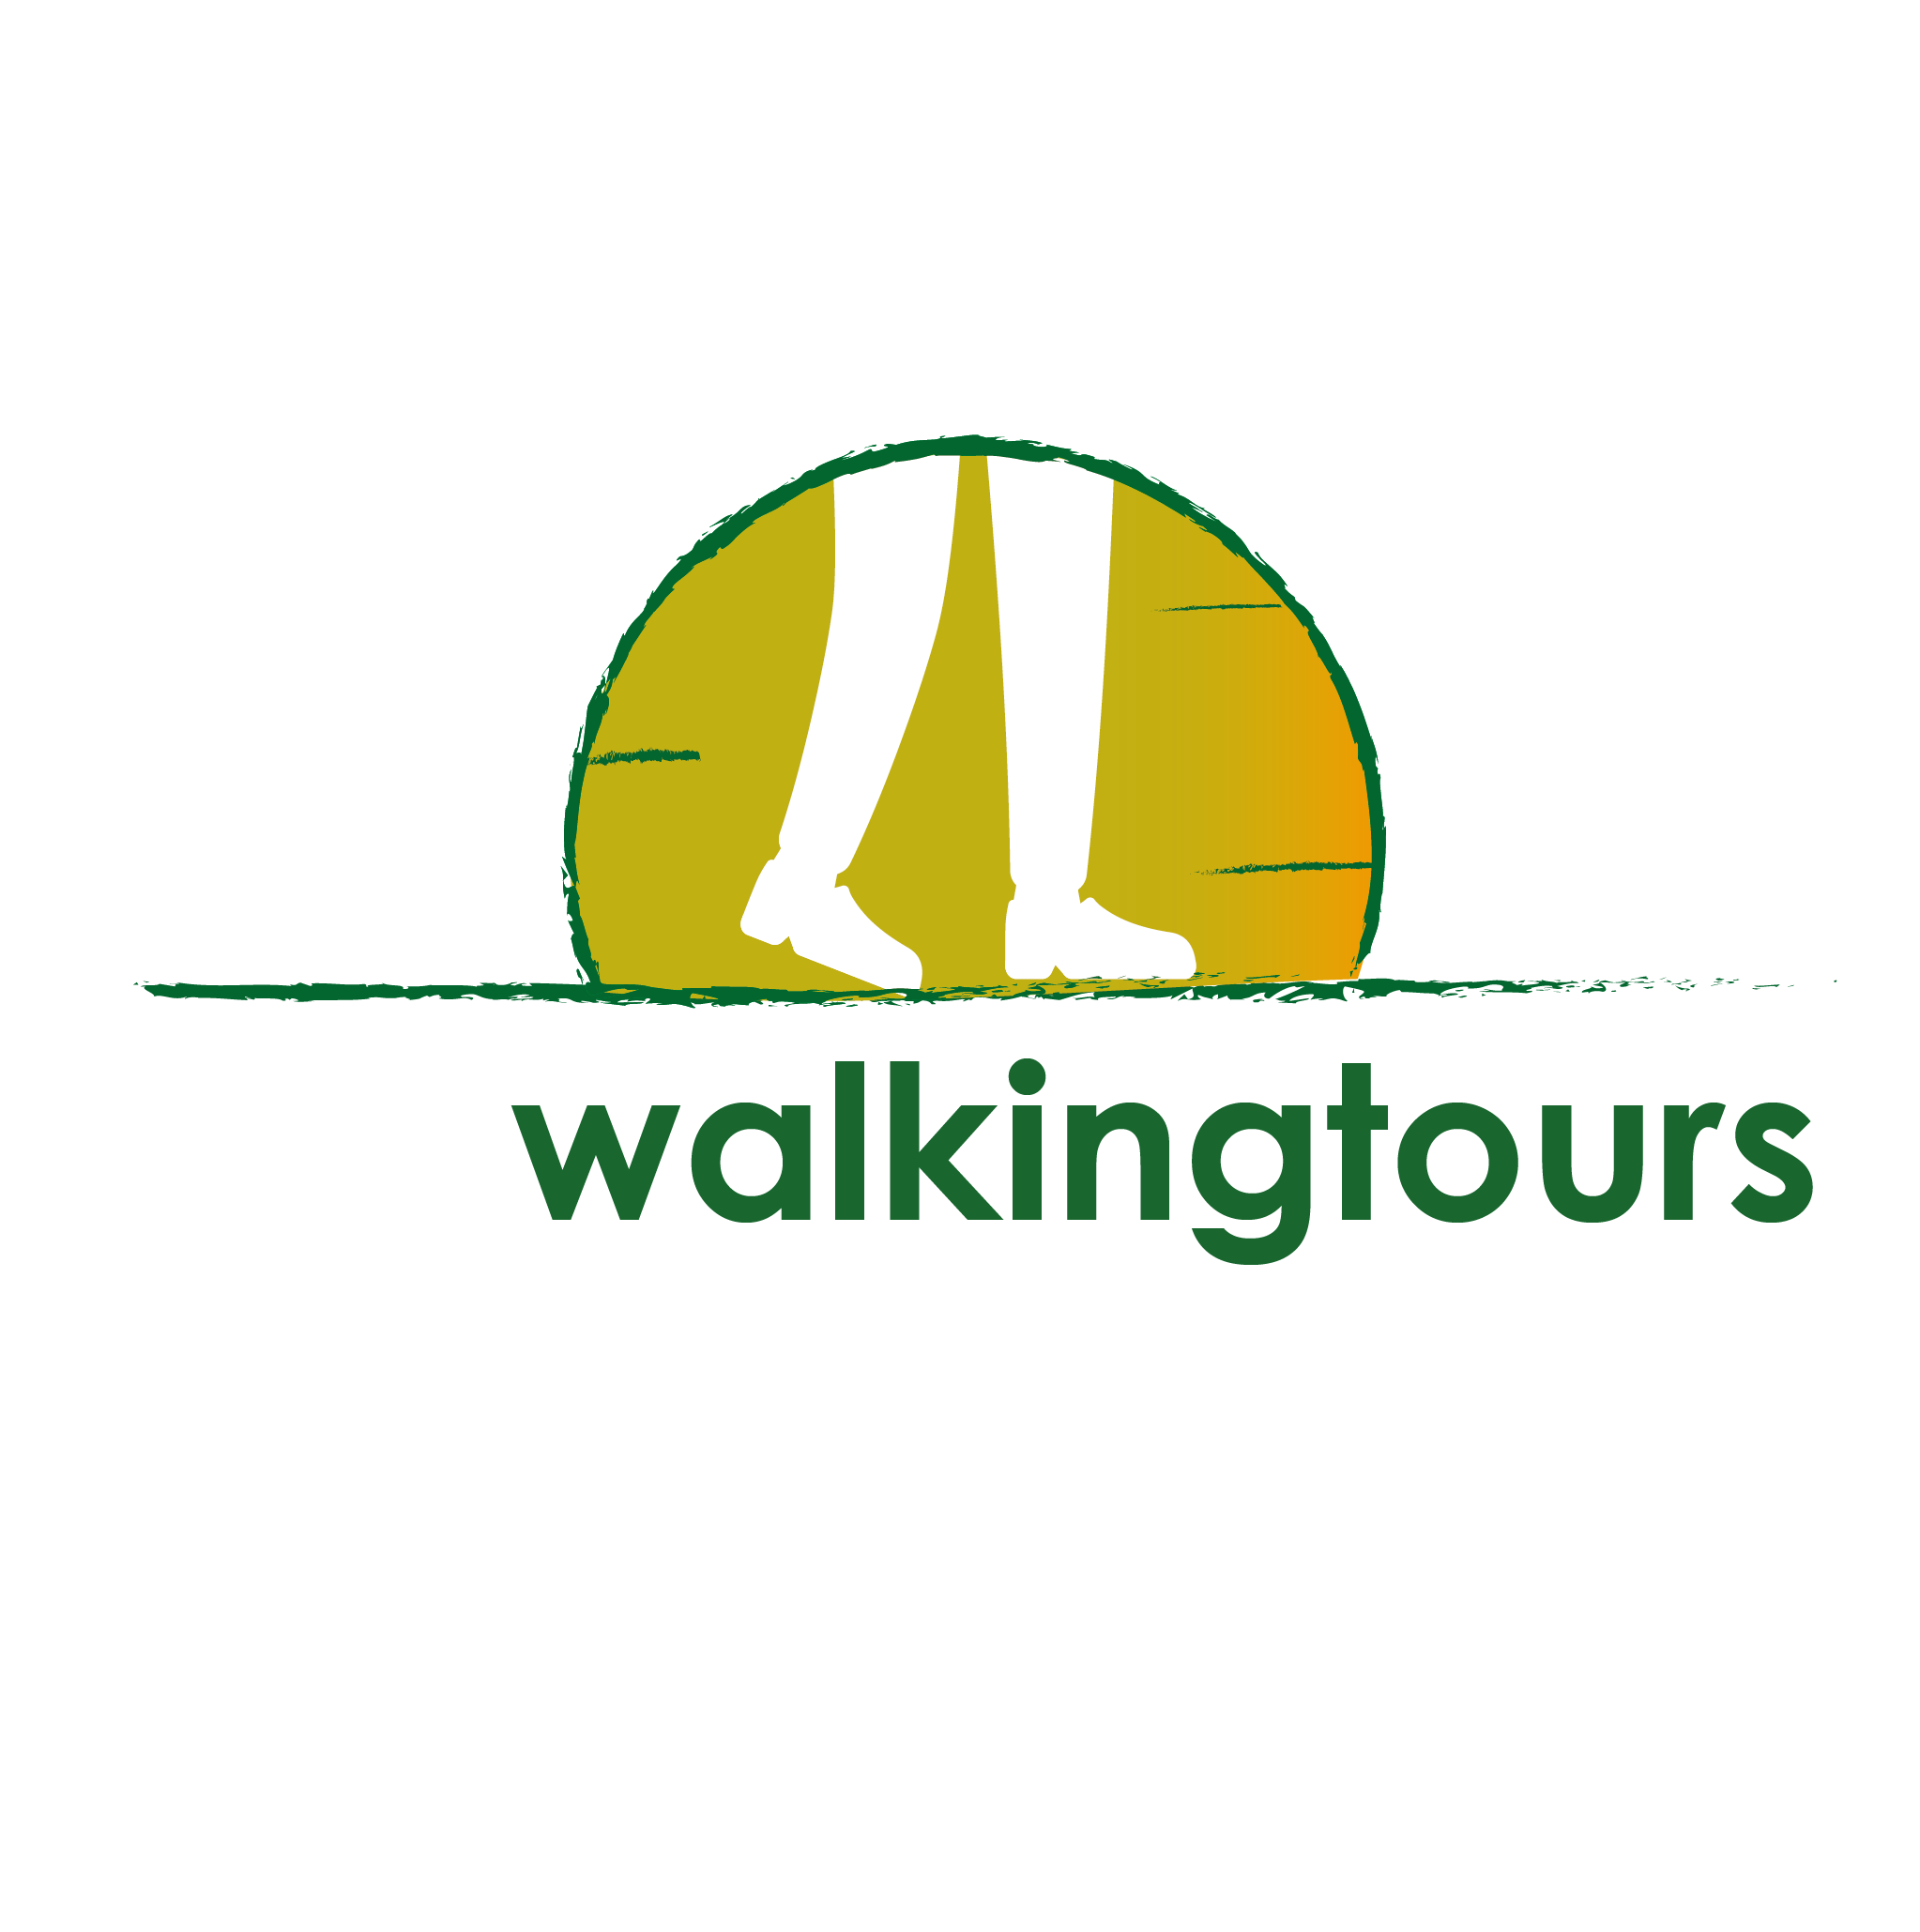 Top Bike Tours Portugal